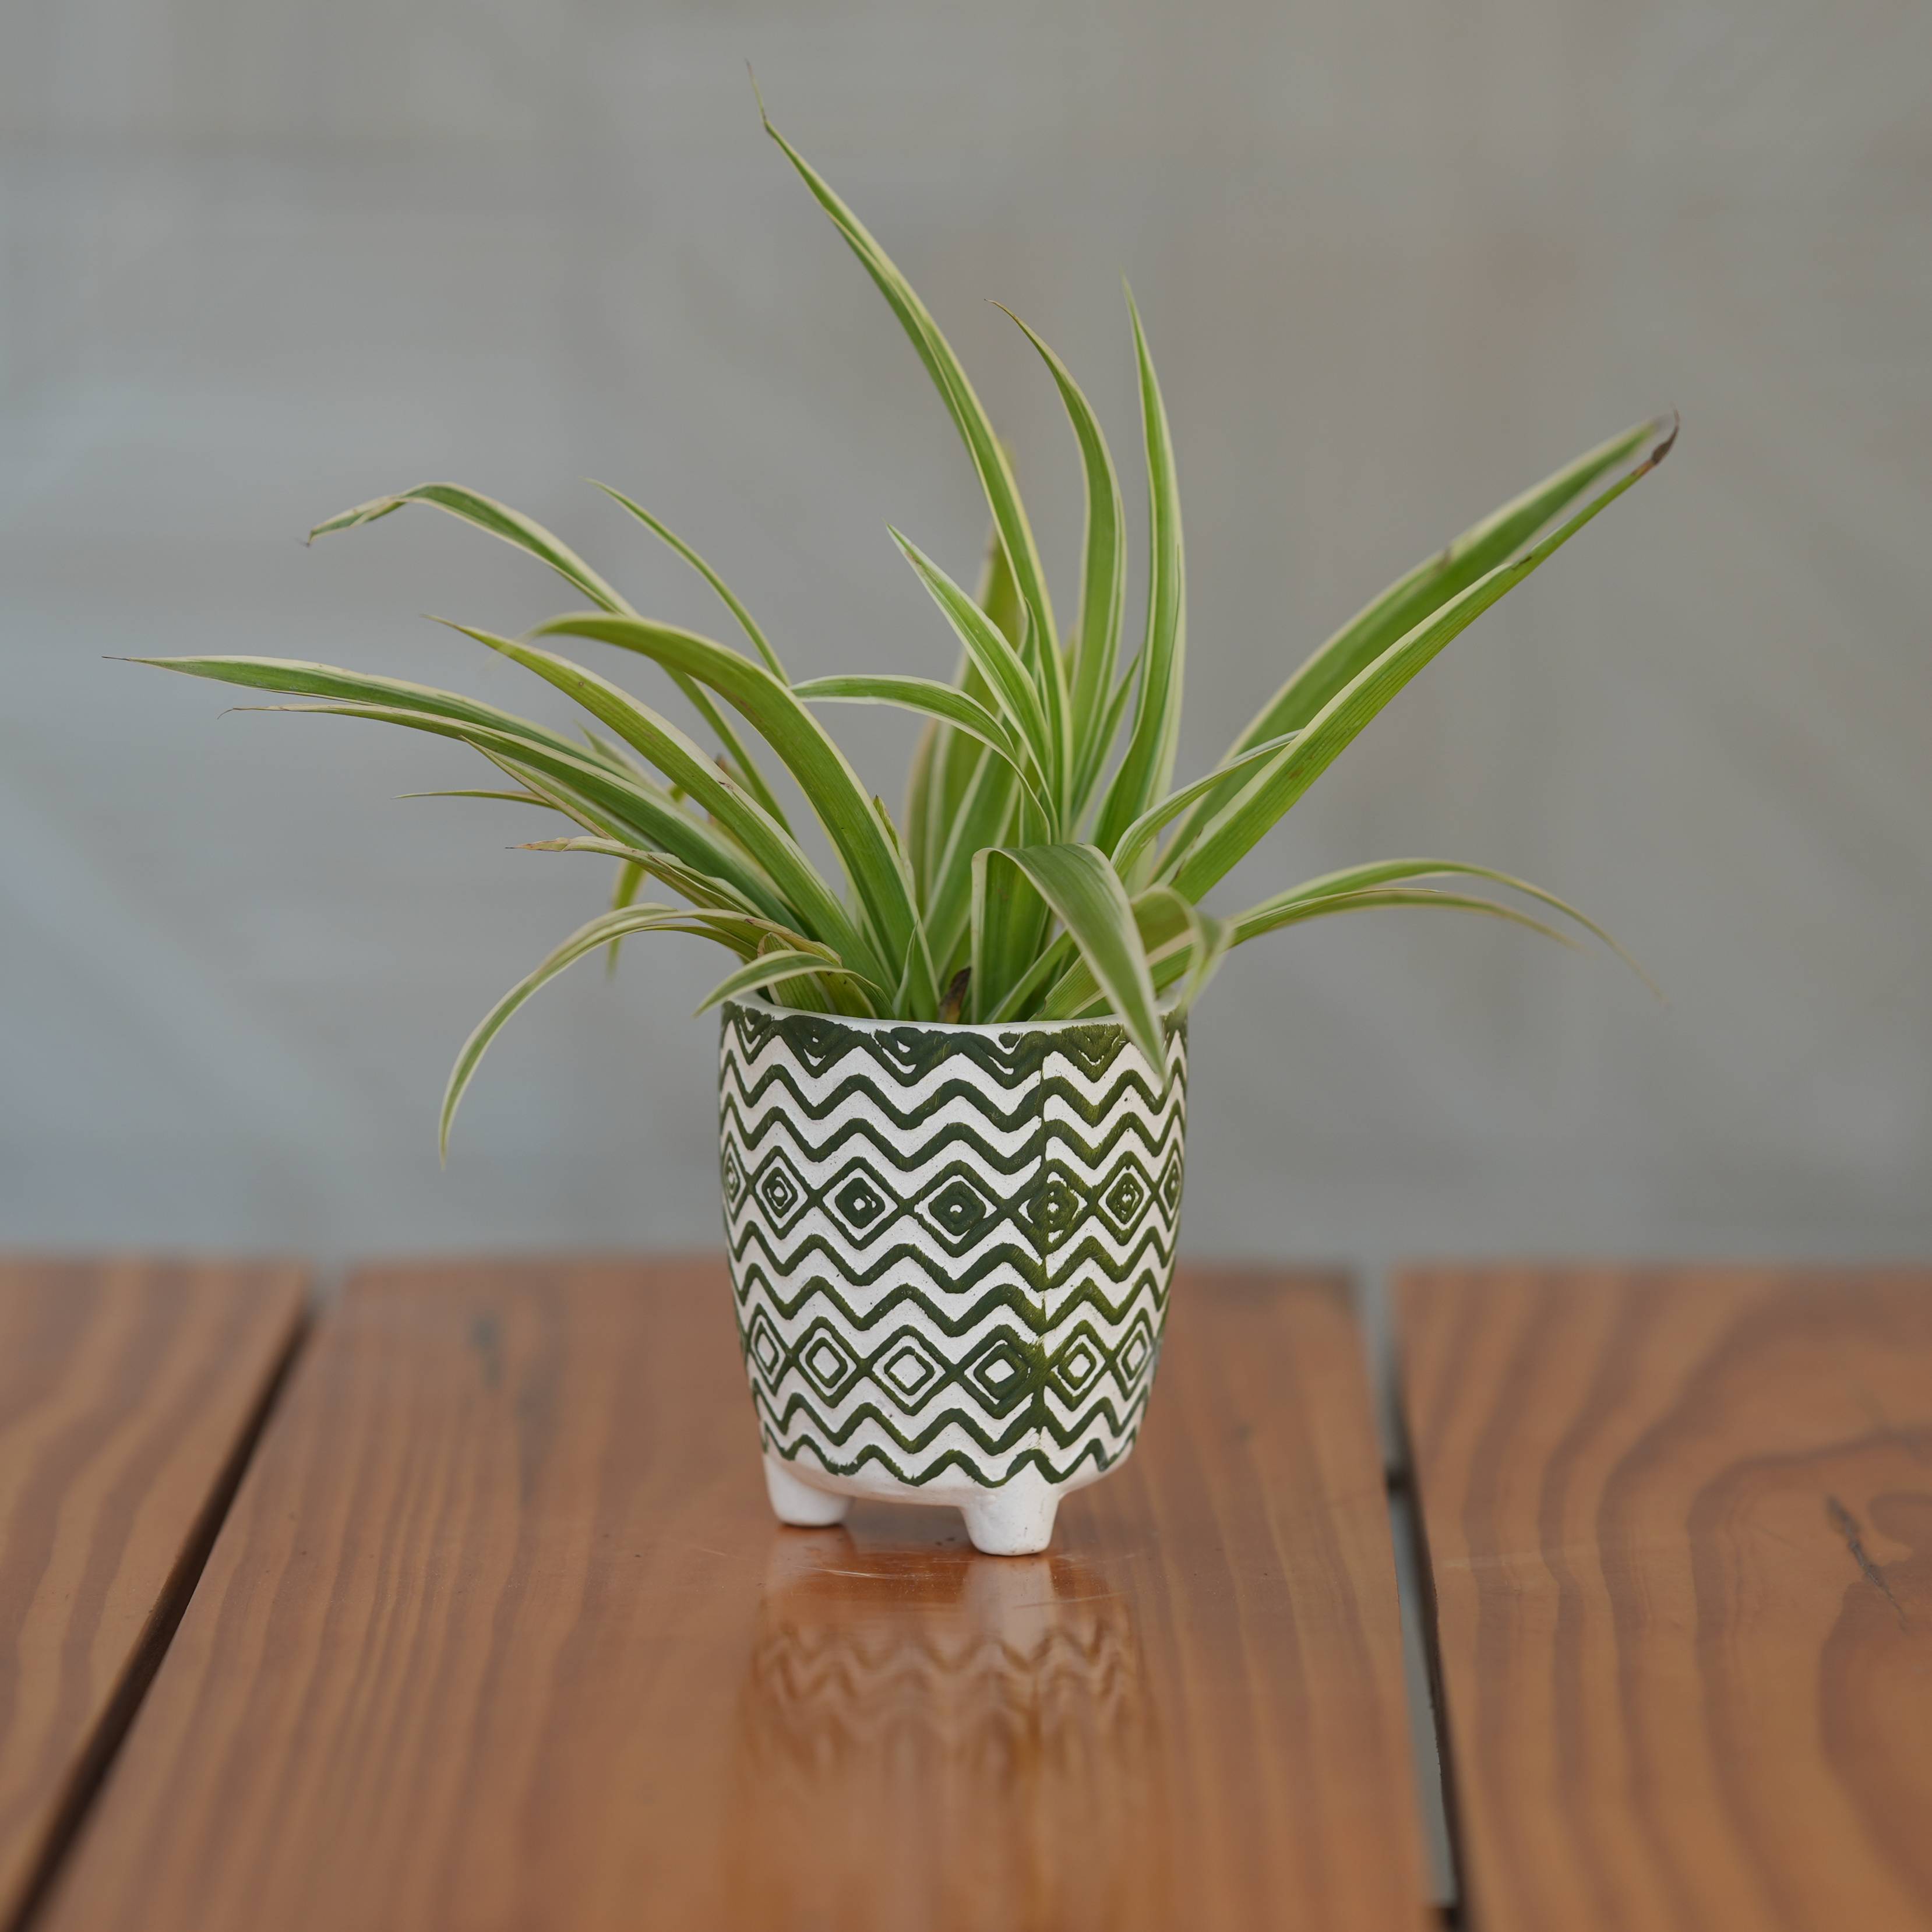 Ceramic Unique Green and White Zigzag Pattern Planter For Plants